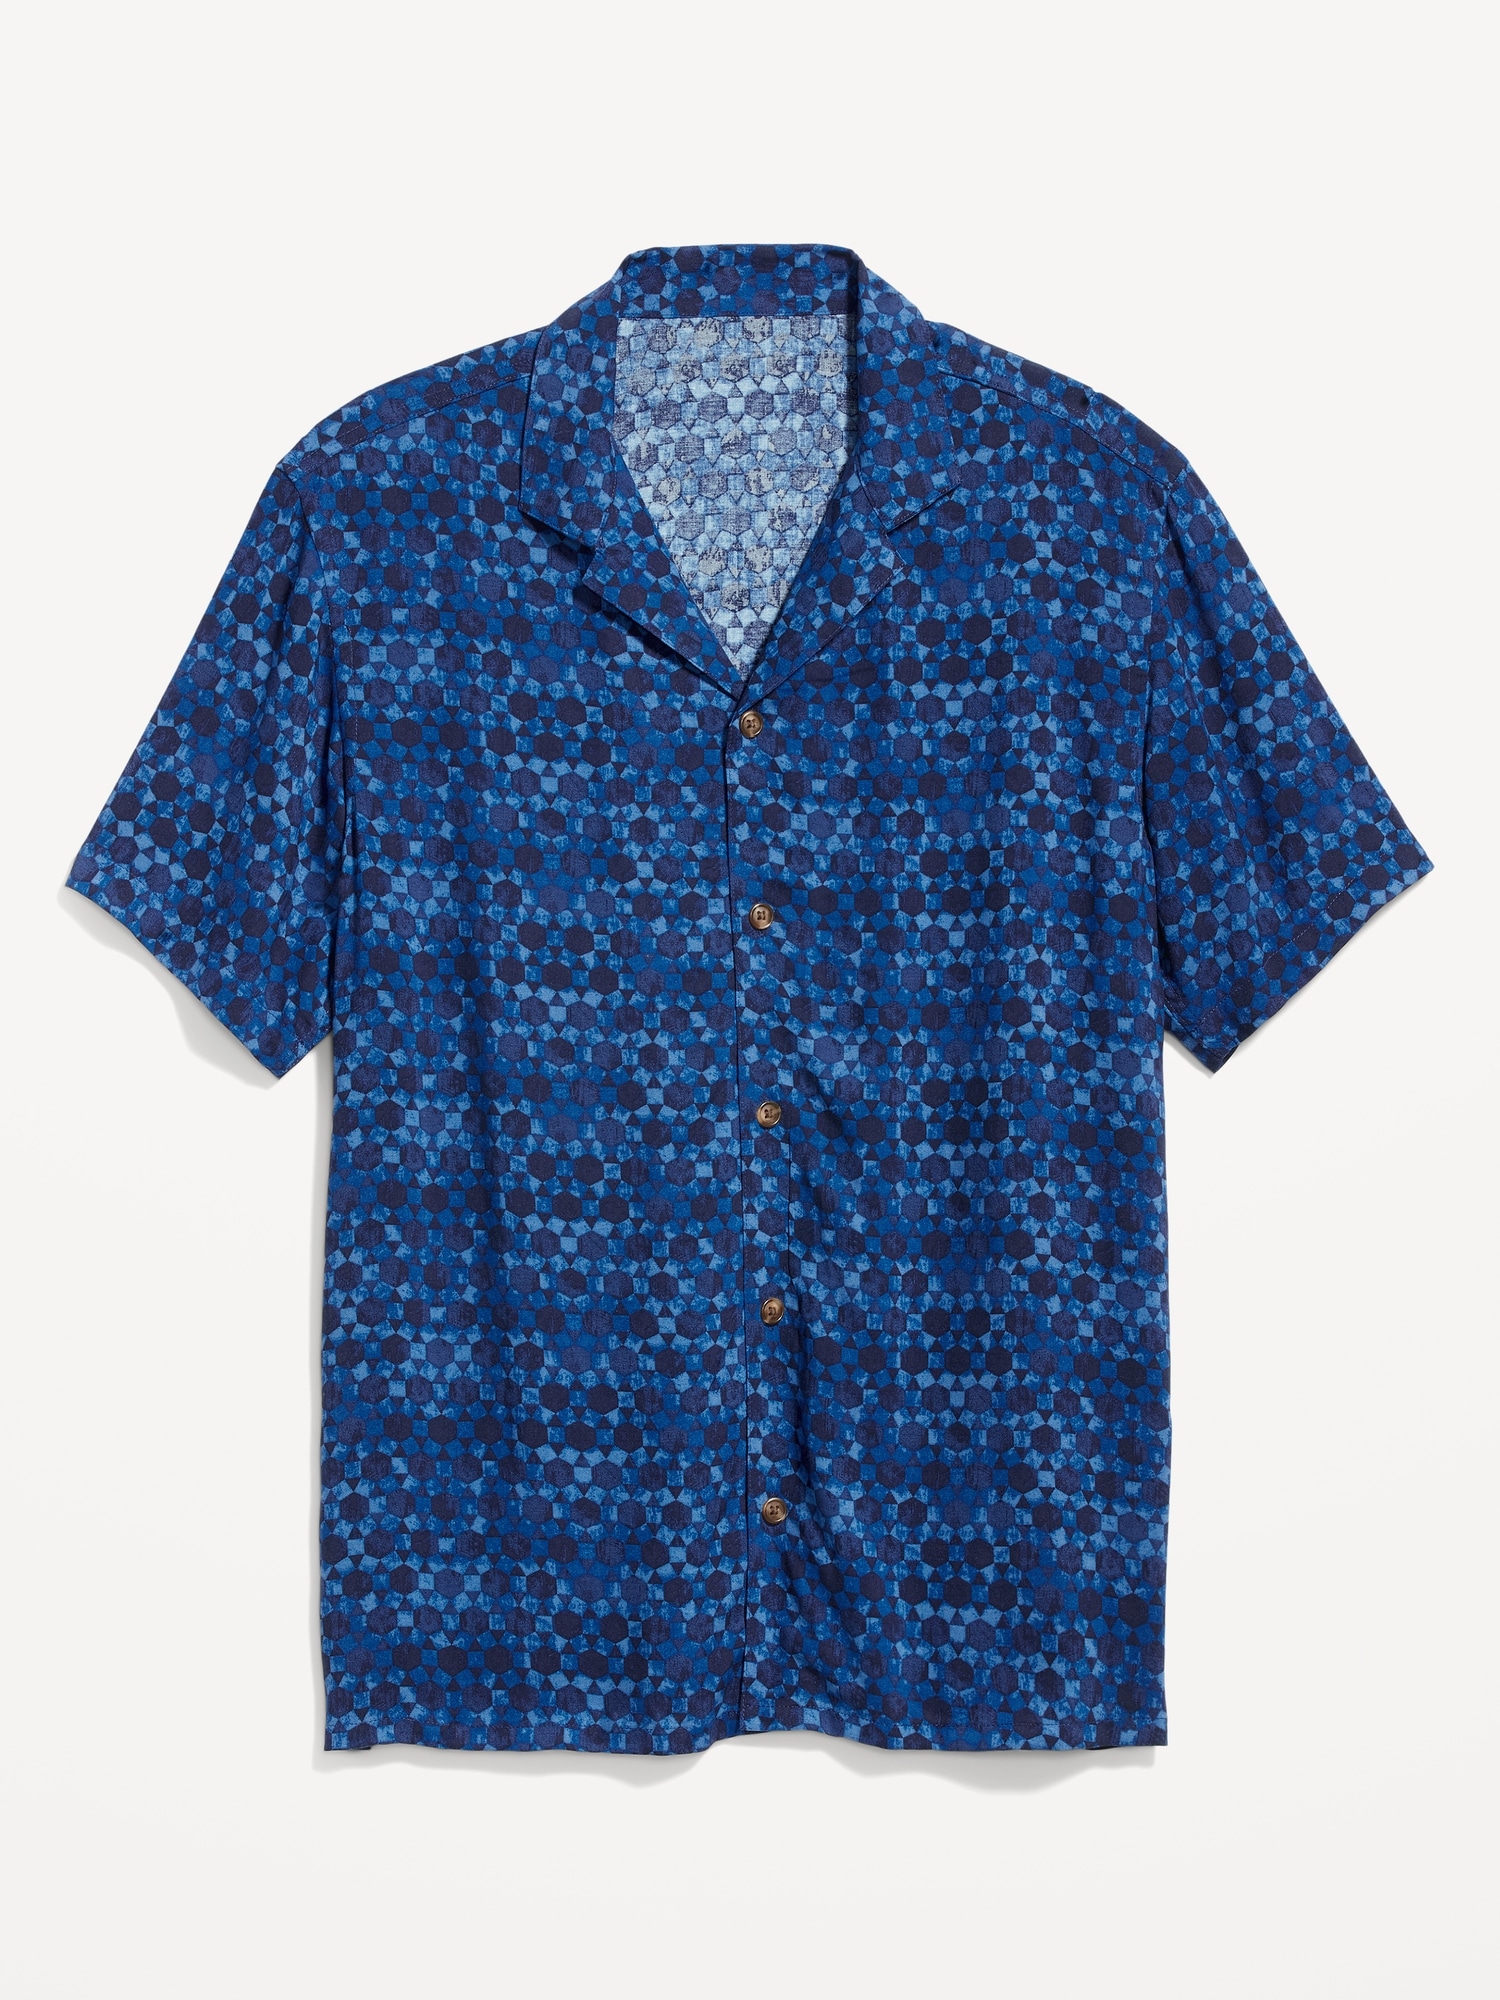 Old Navy Matching Print Camp Shirt for Men blue. 1